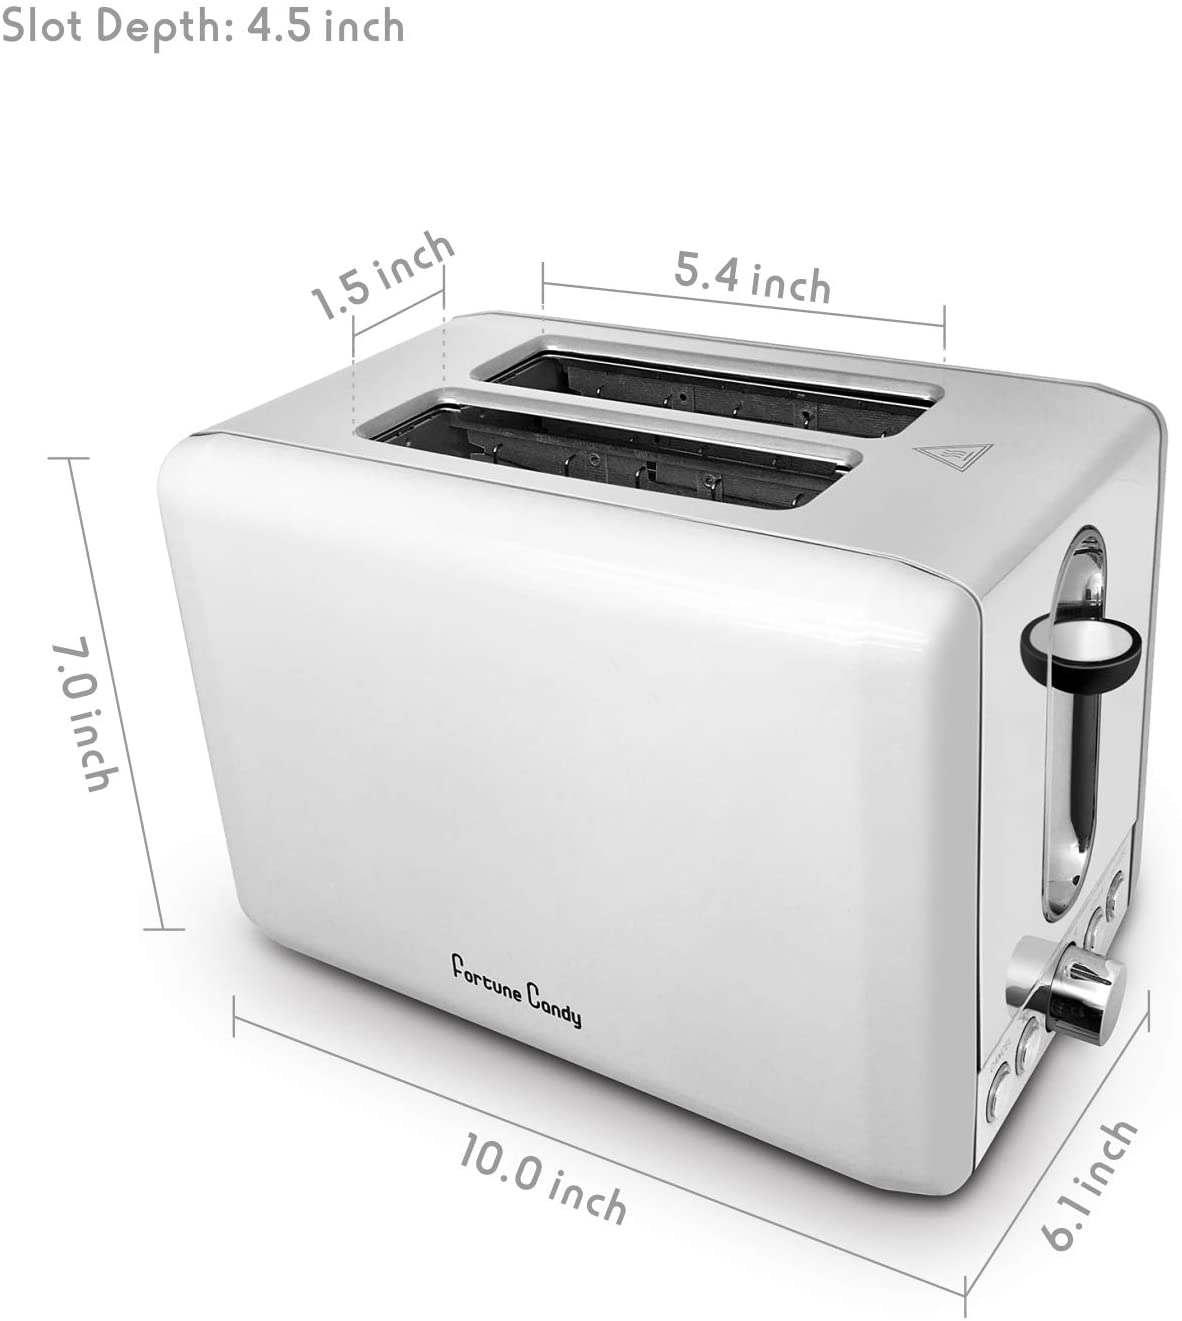 Toasters 2 Slice Best Rated Prime, Stainless Steel,Bagel Toaster - 6 B –  Mega Casa